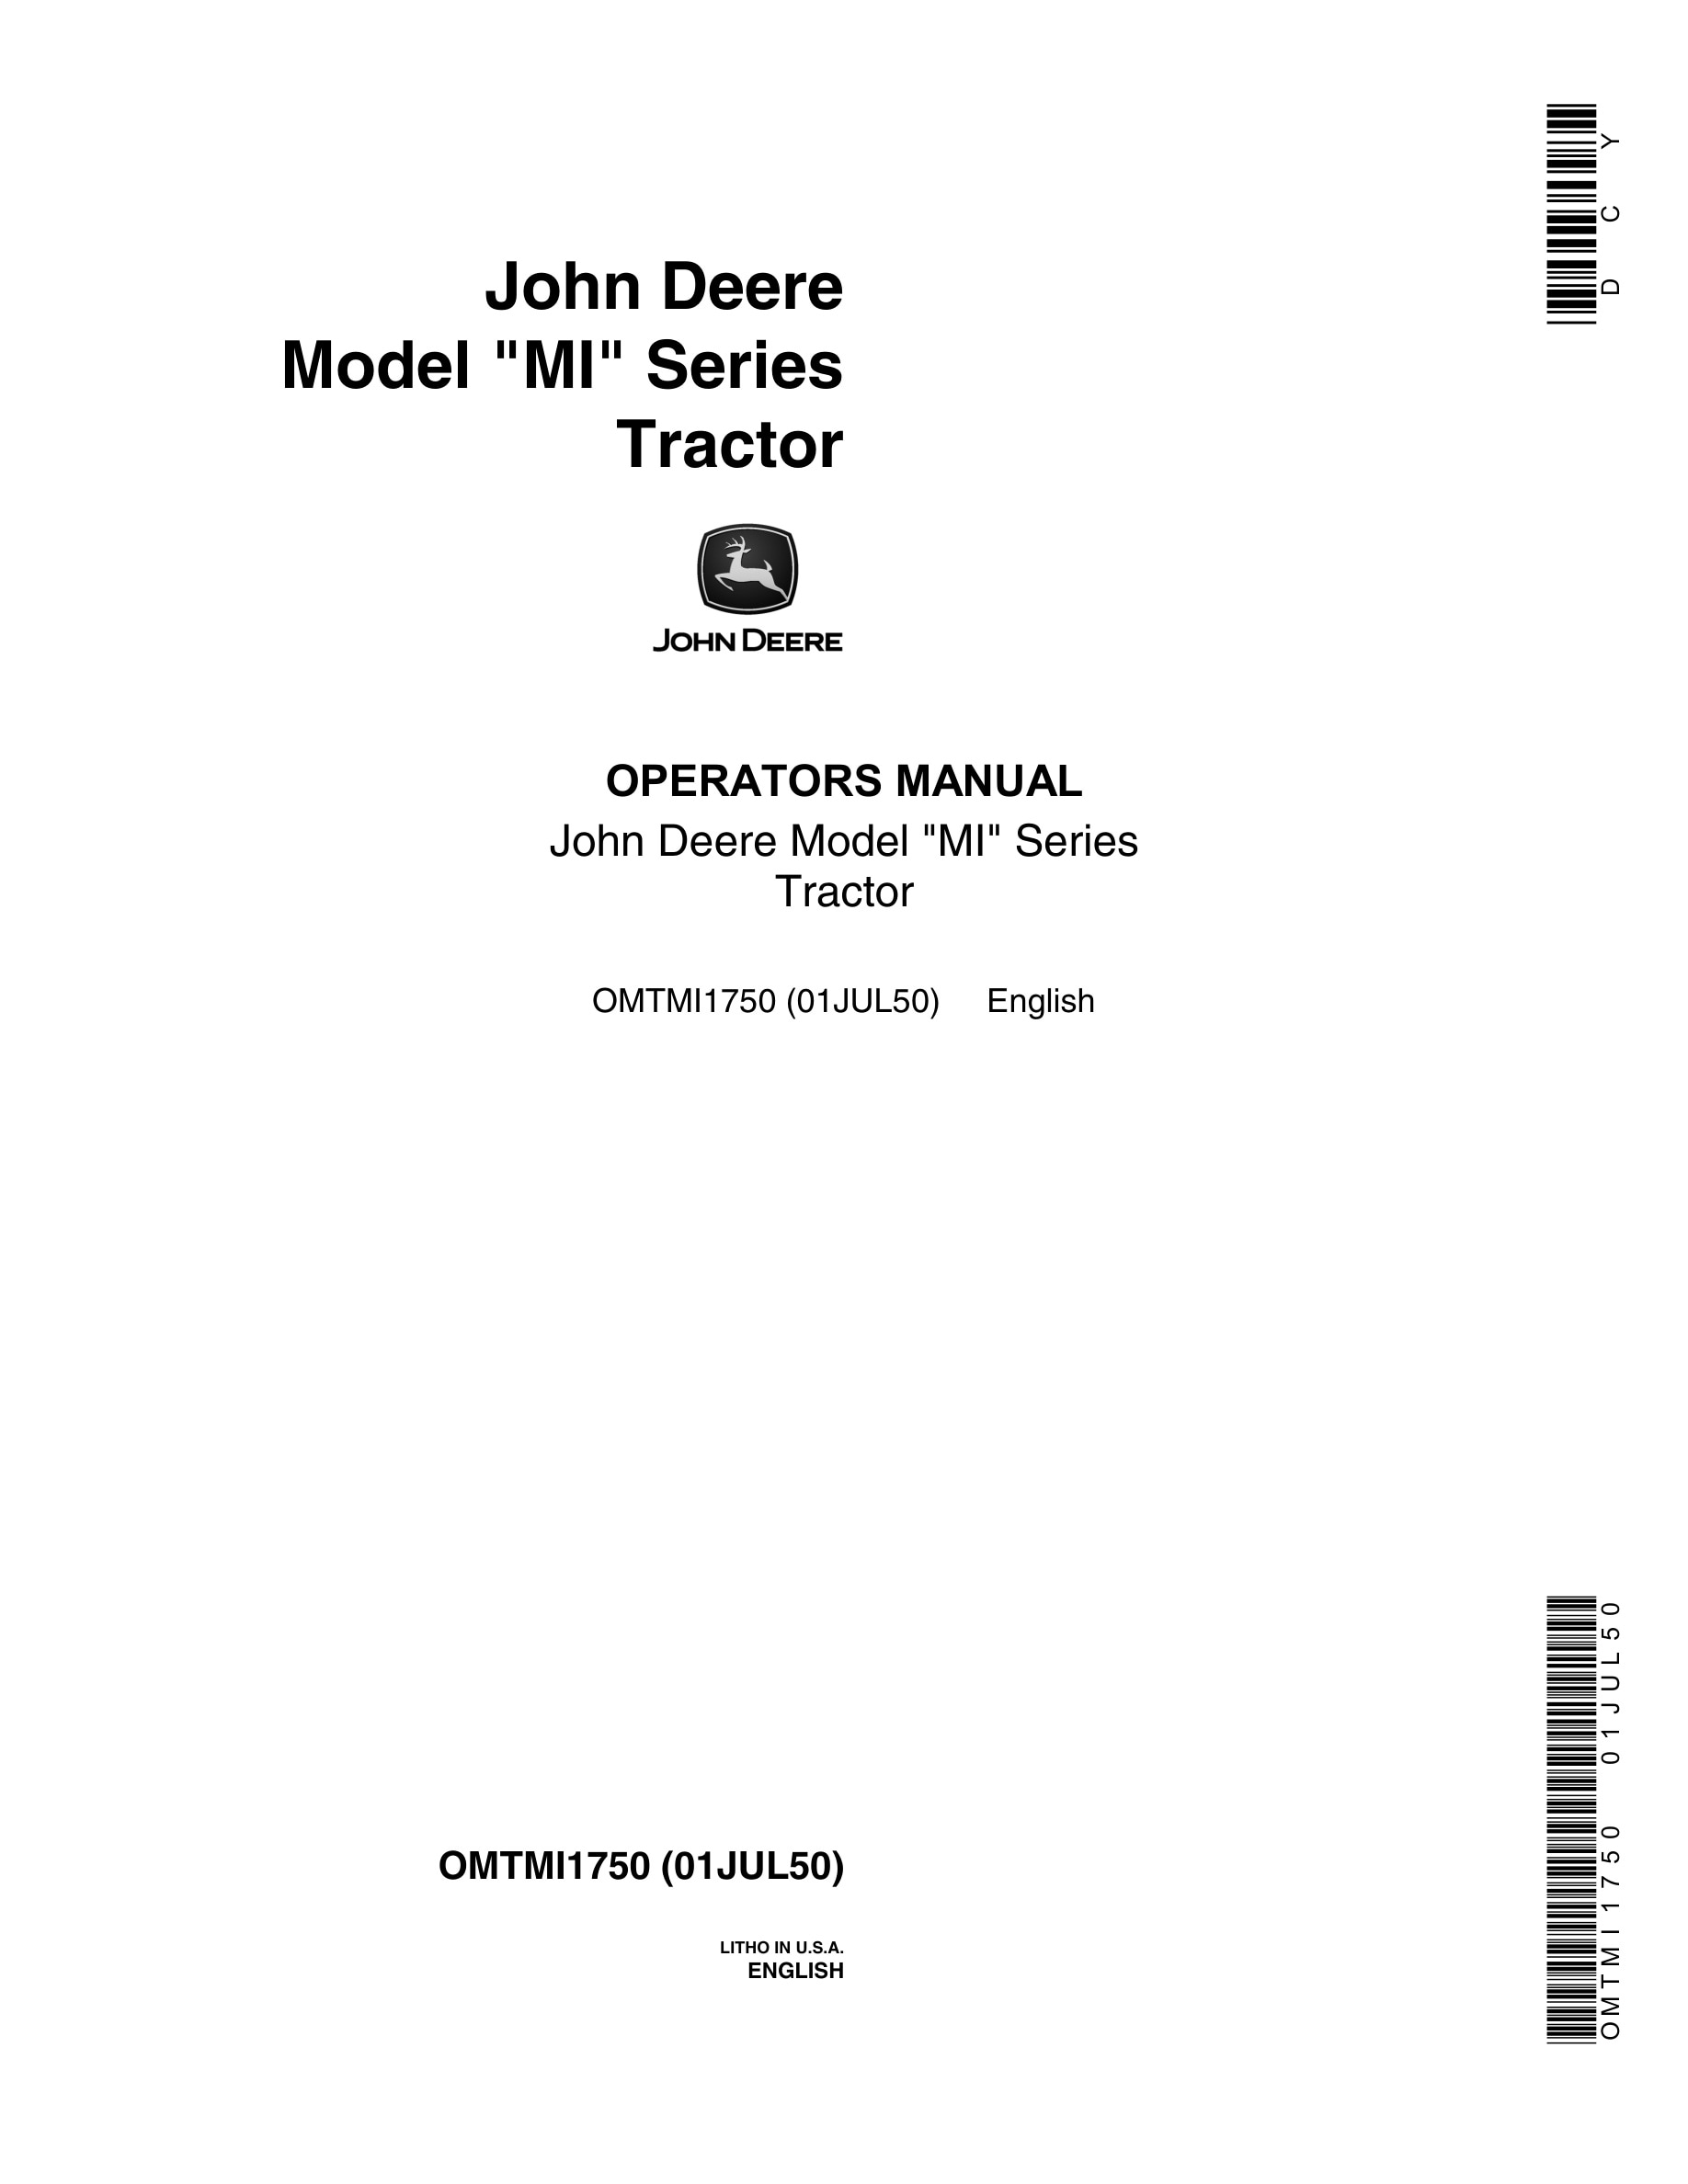 John Deere Model MI Tractor Operator Manual OMTMI1750-1